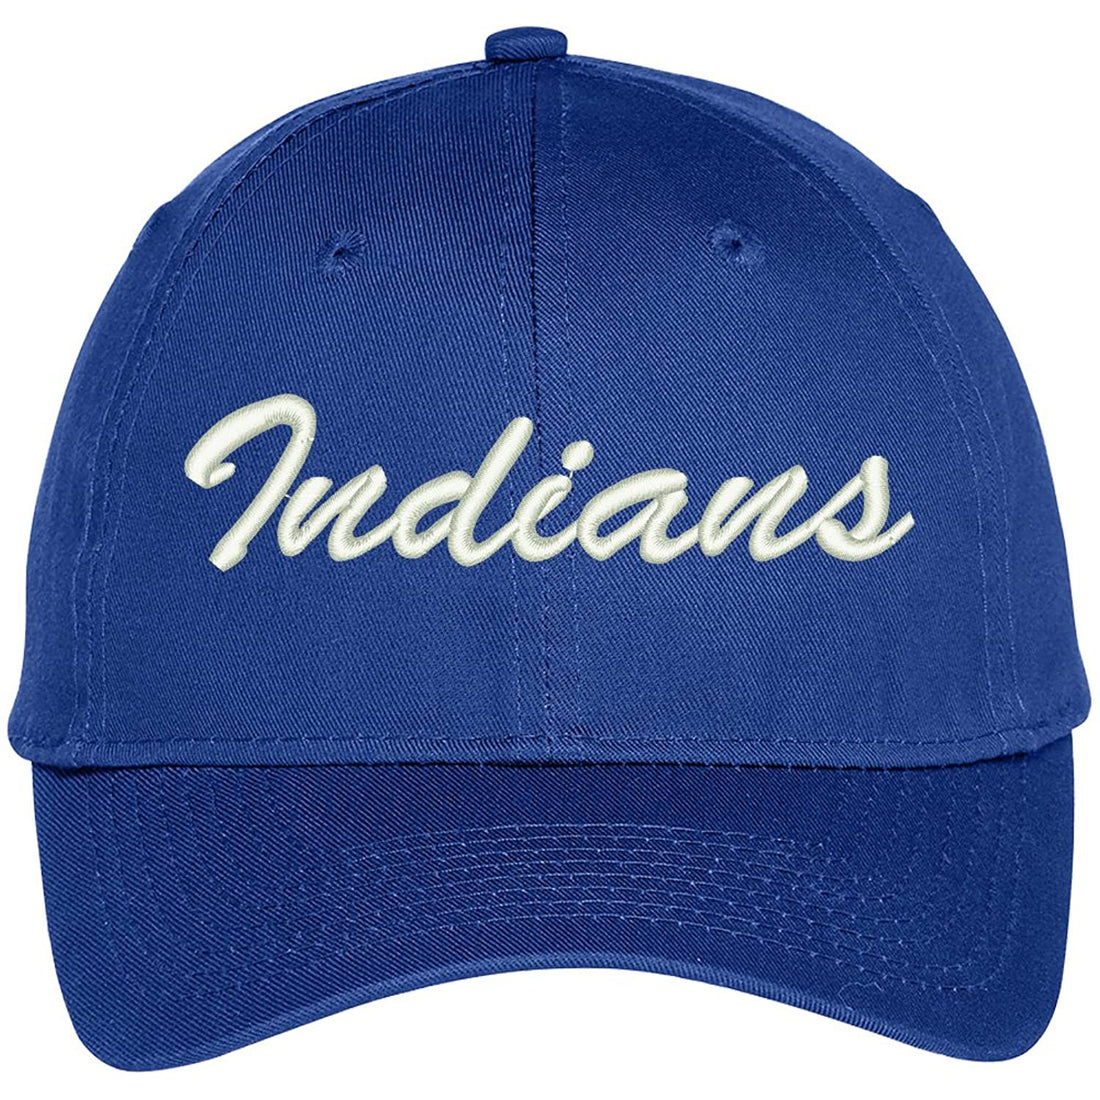 Trendy Apparel Shop Indians Embroidered Precurved Adjustable Cap